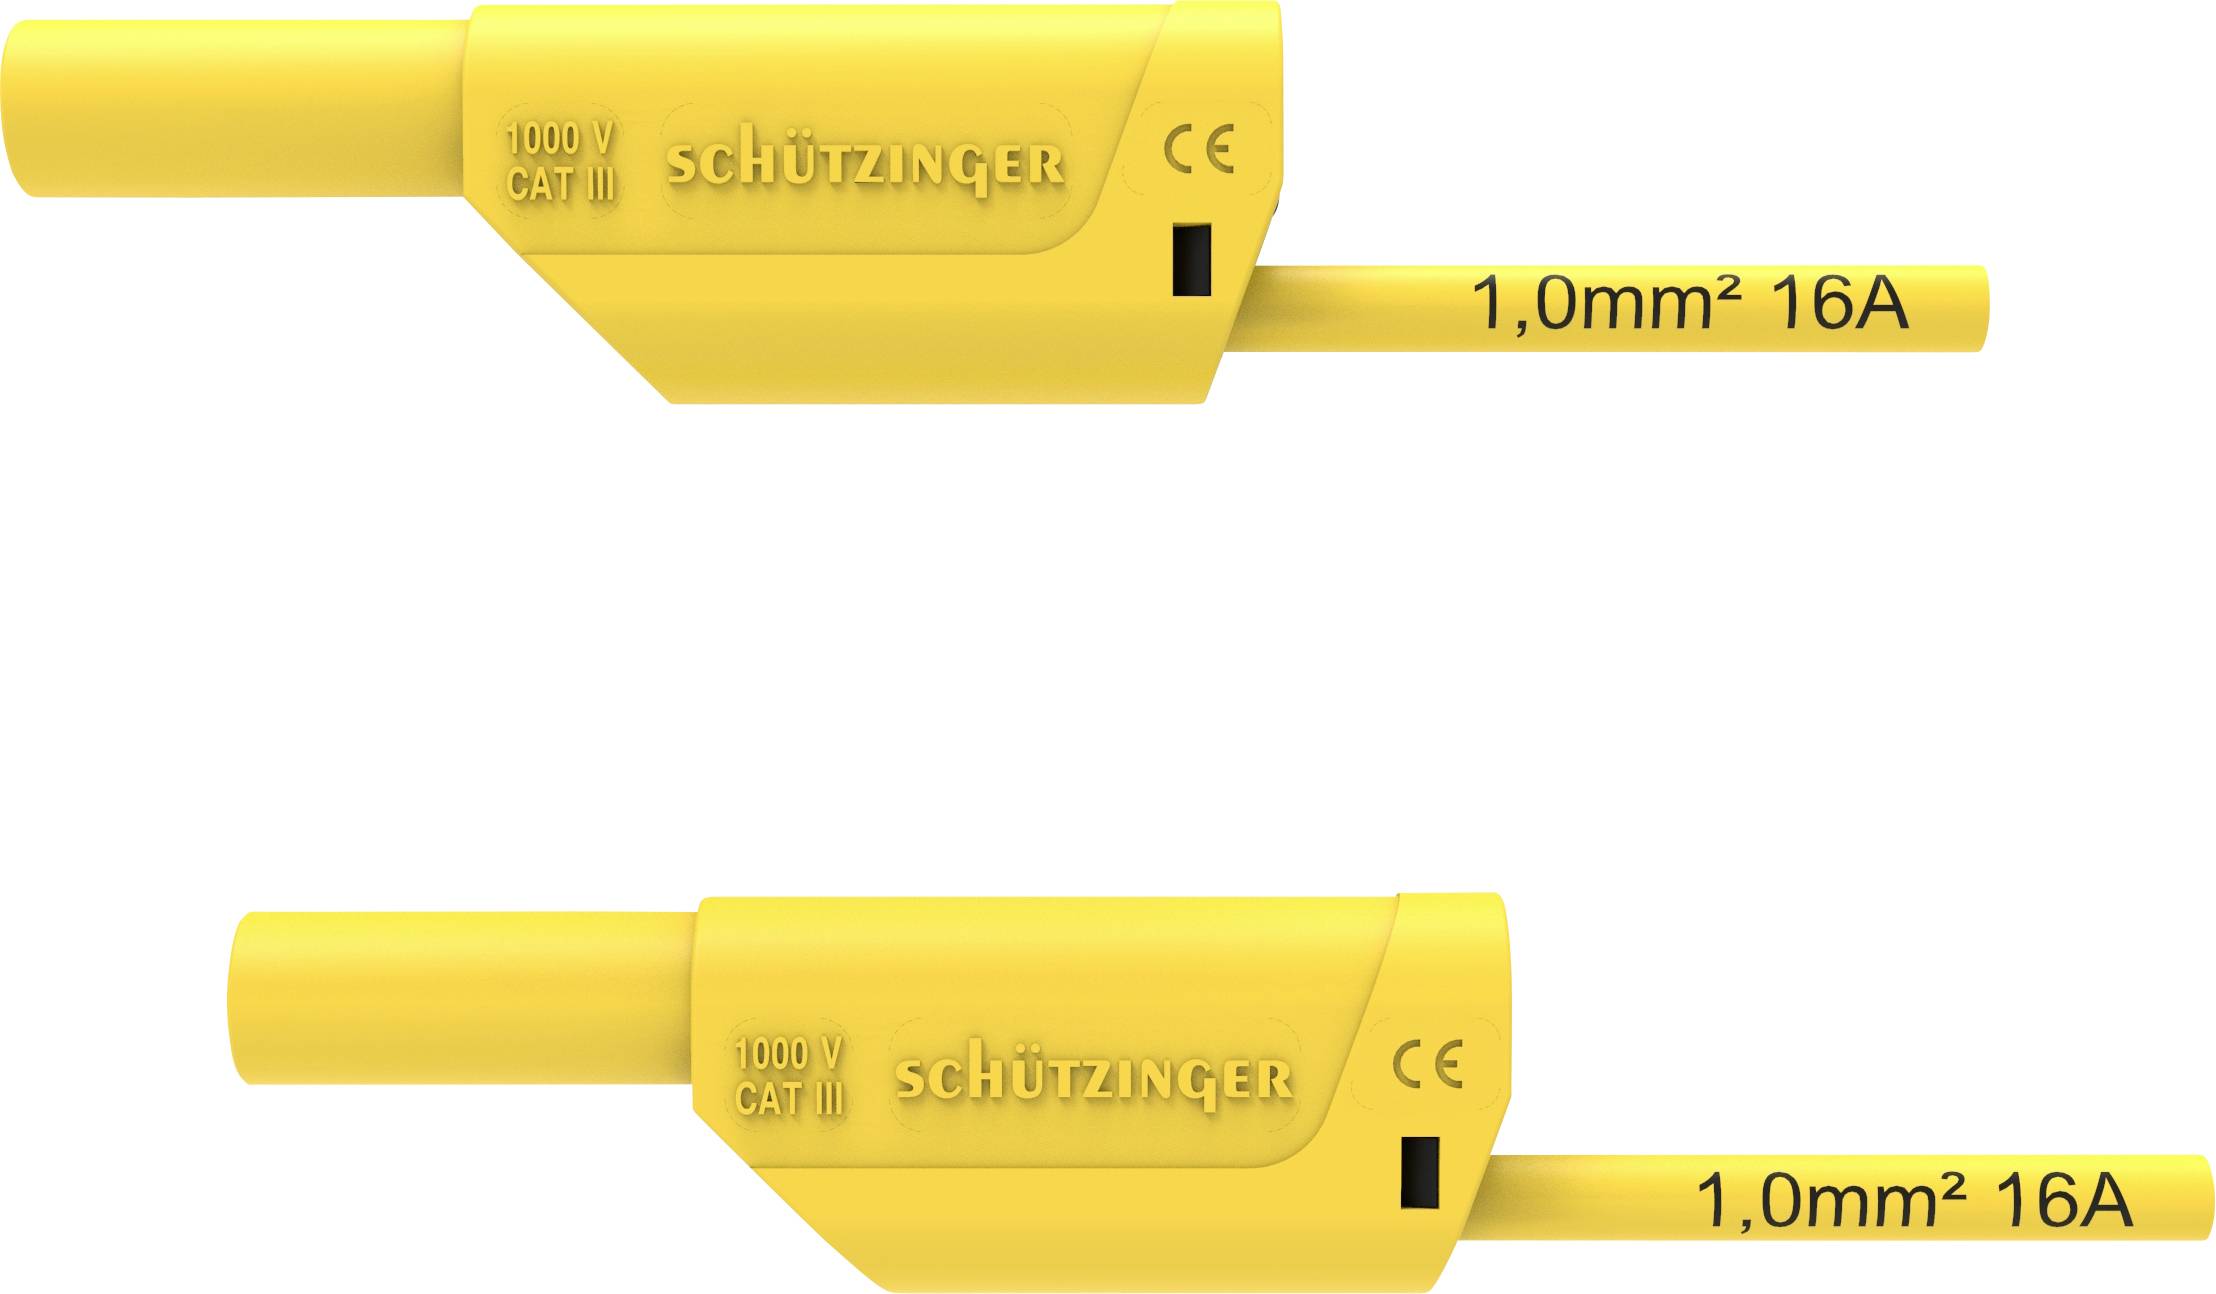 SCHÜTZINGER VSFK 8700 / 1 / 100 / GE Sicherheits-Messleitung [4 mm-Stecker - 4 mm-Stecker] 100.